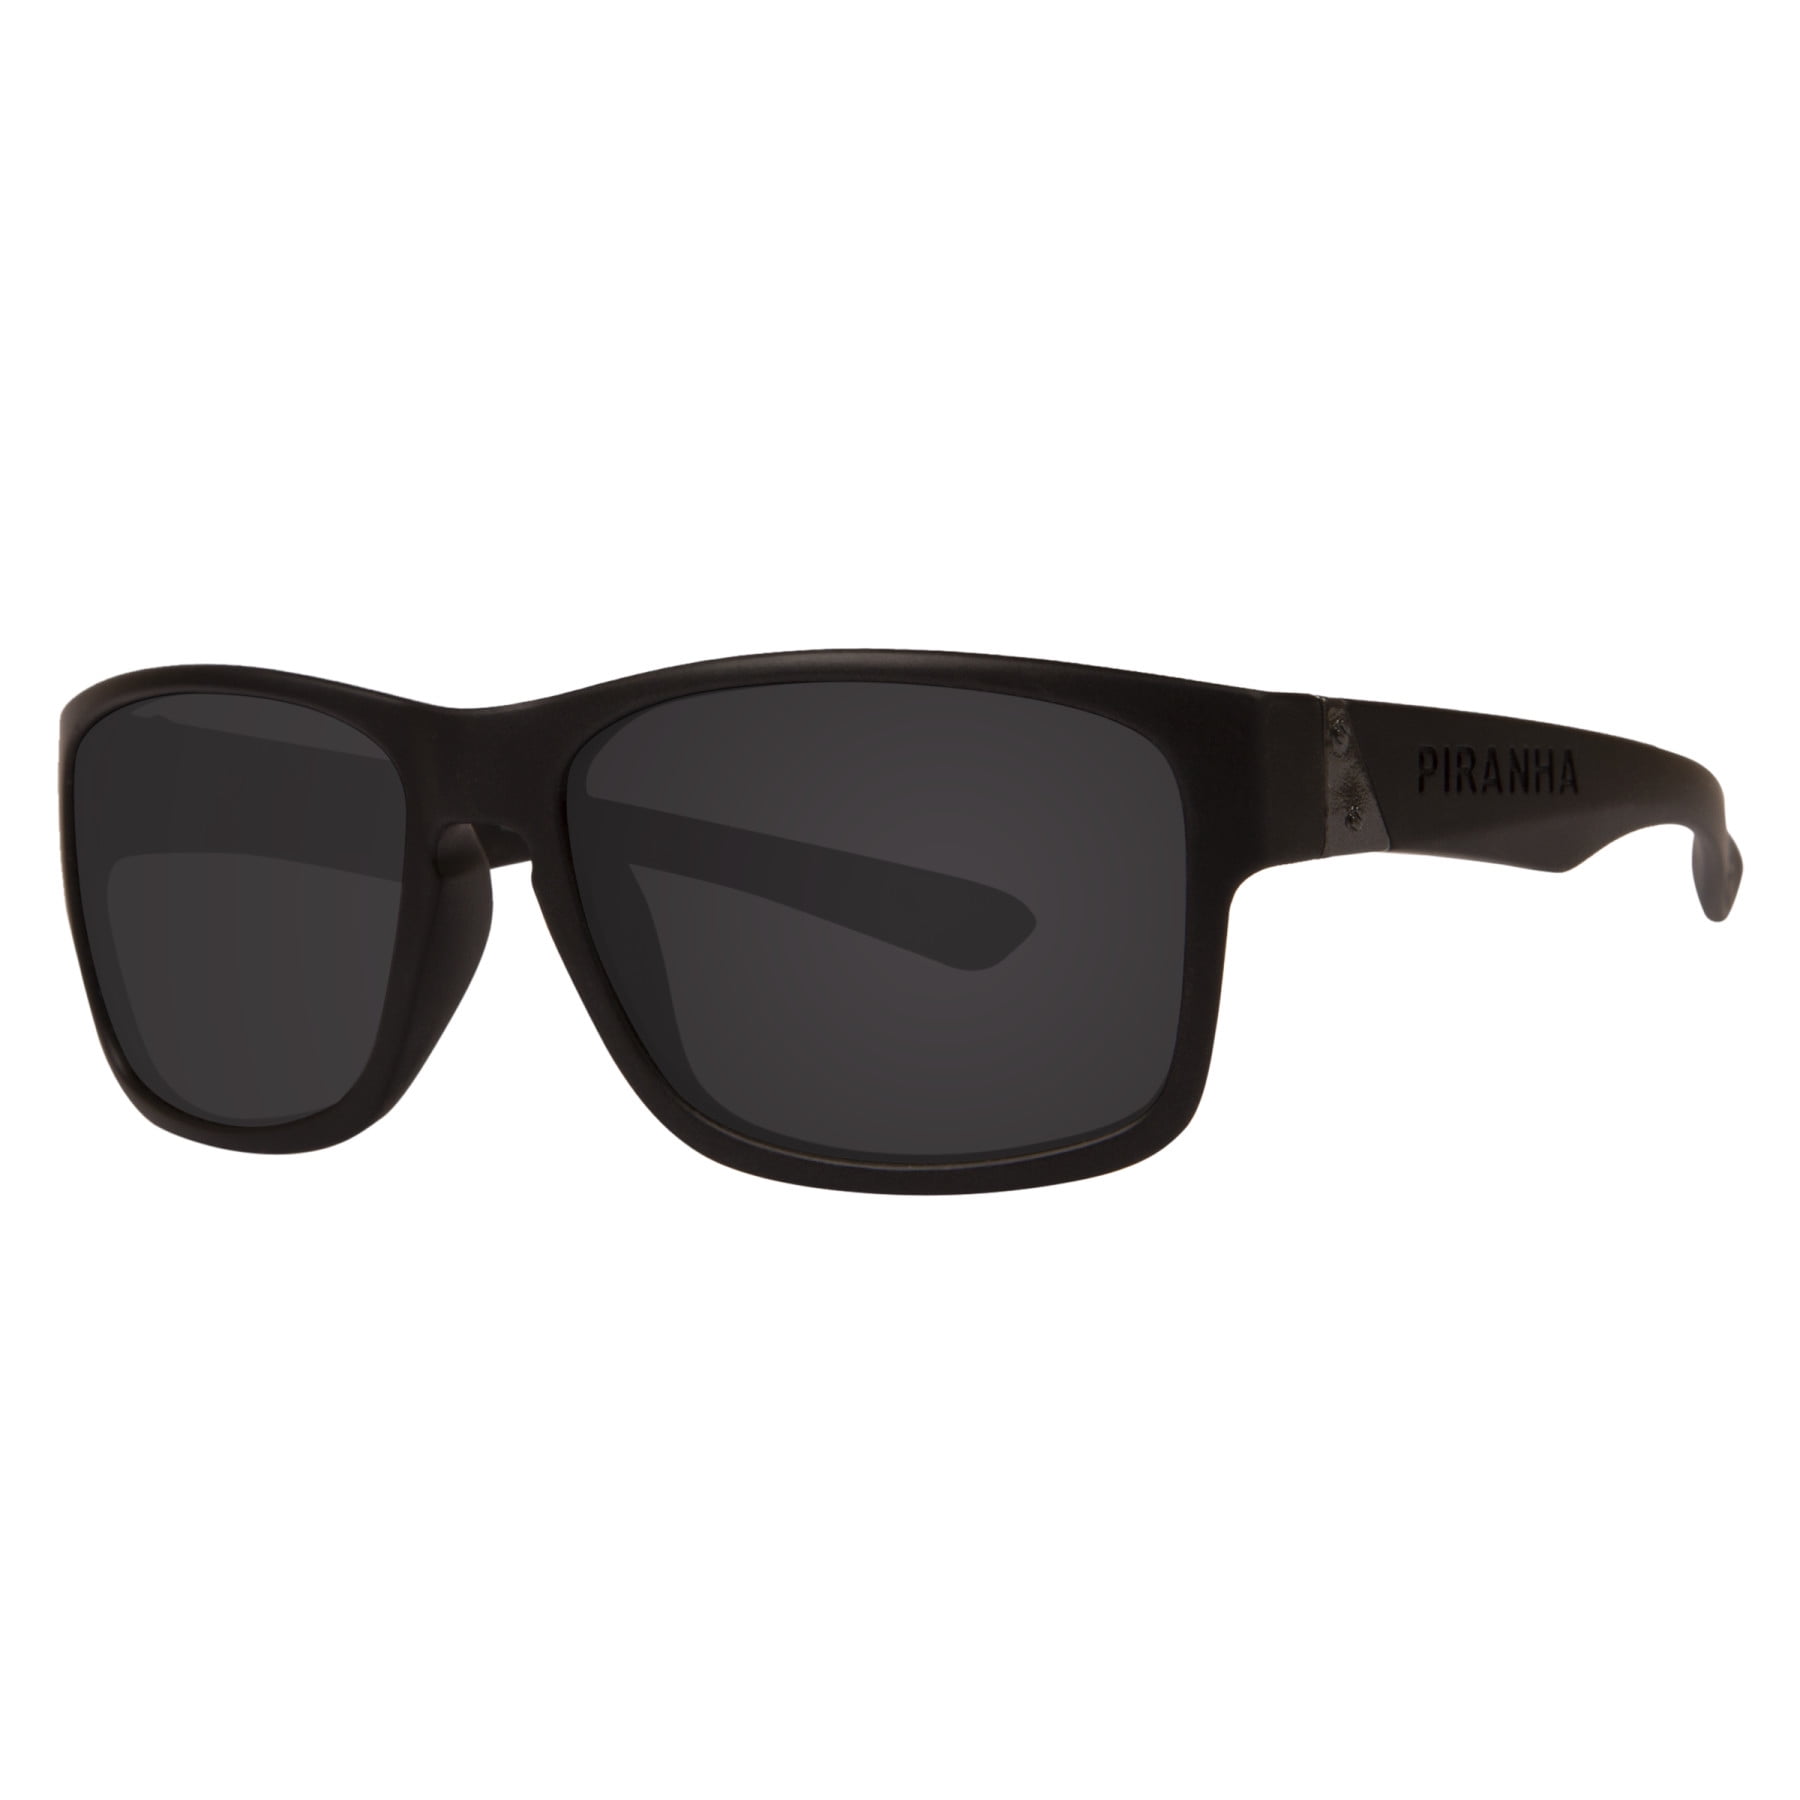 Piranha Aspen Hydrofloat Black Frame Sunglasses with Smoke Polarized Lens